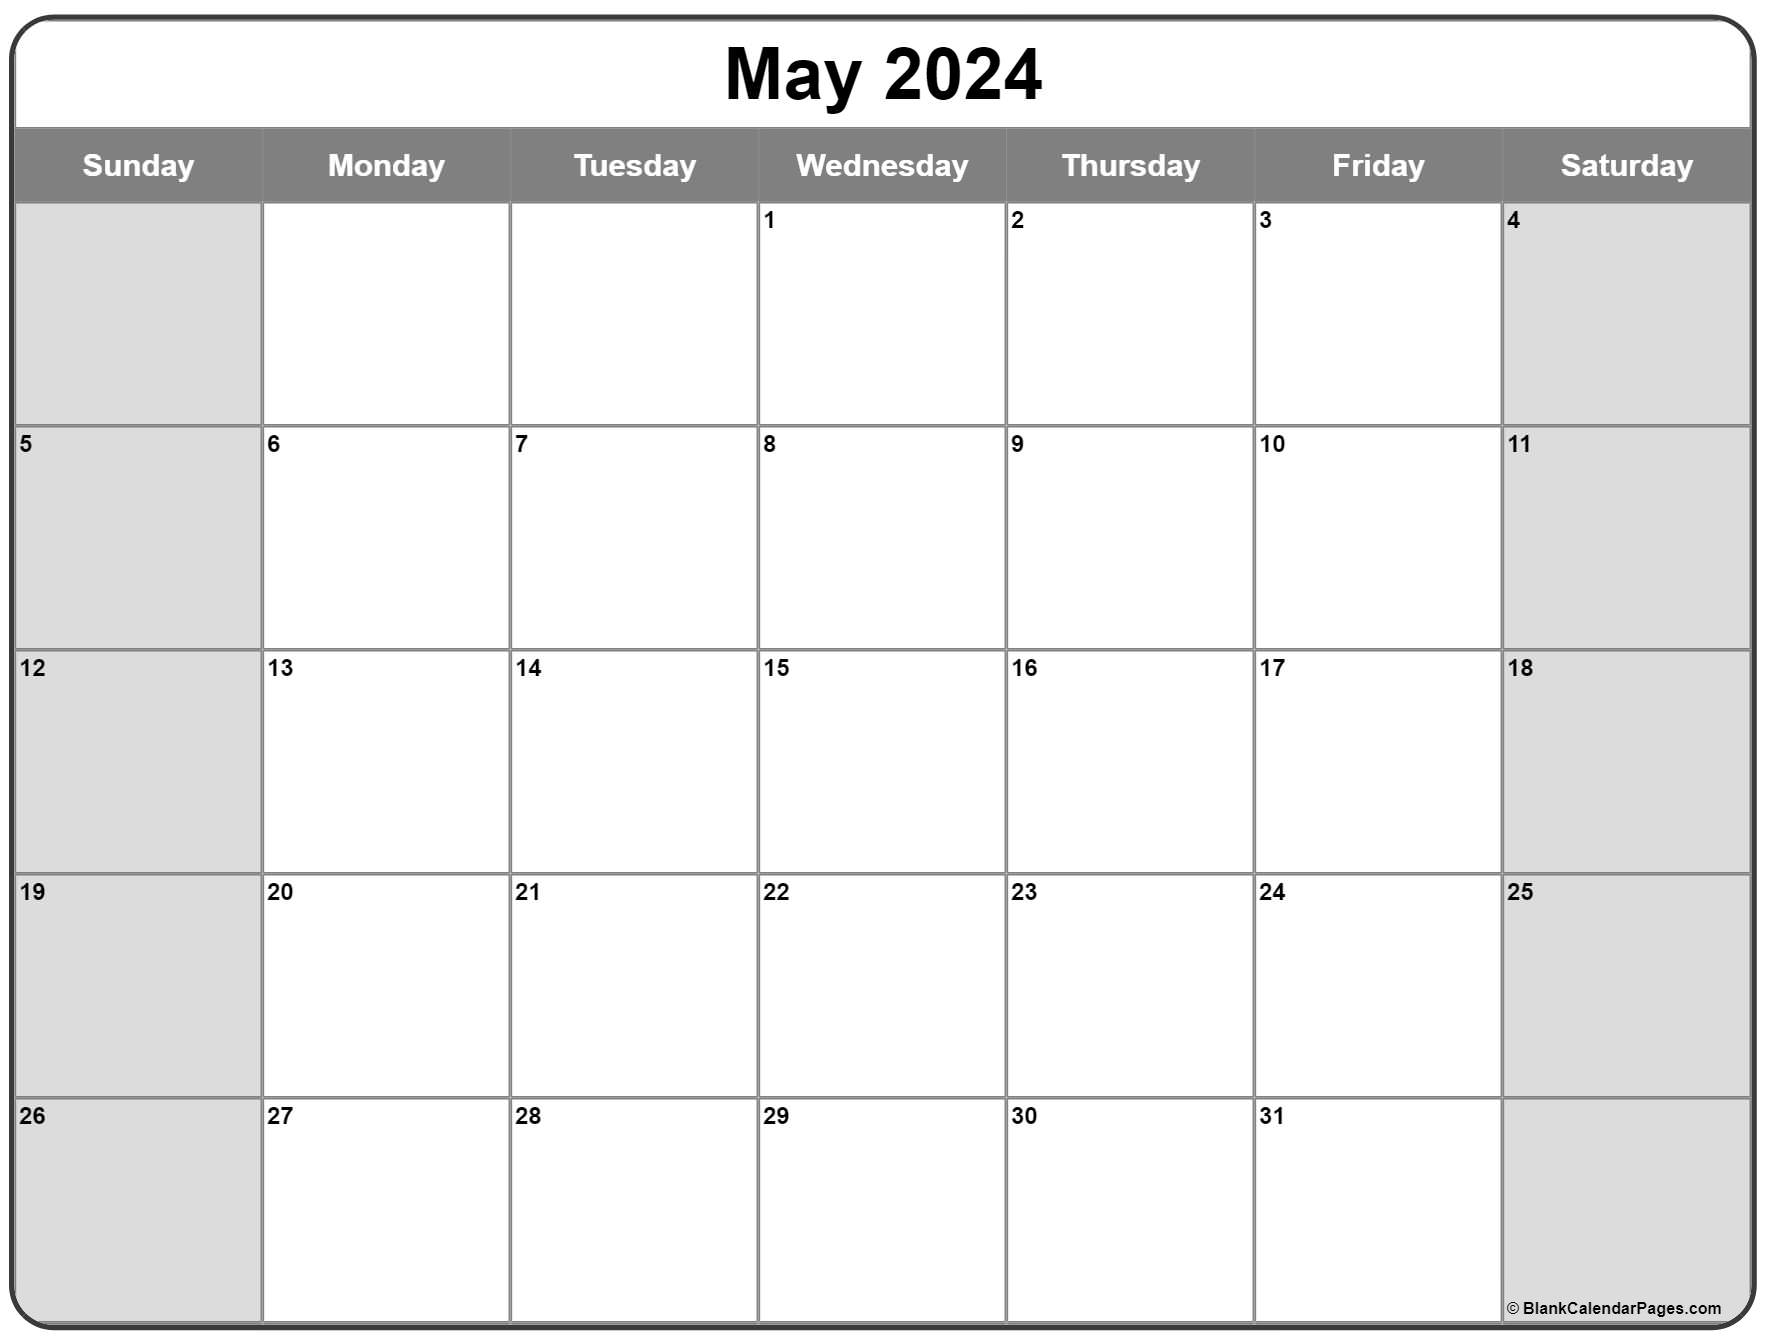 May 2023 Blank Monthly Calendar Riset